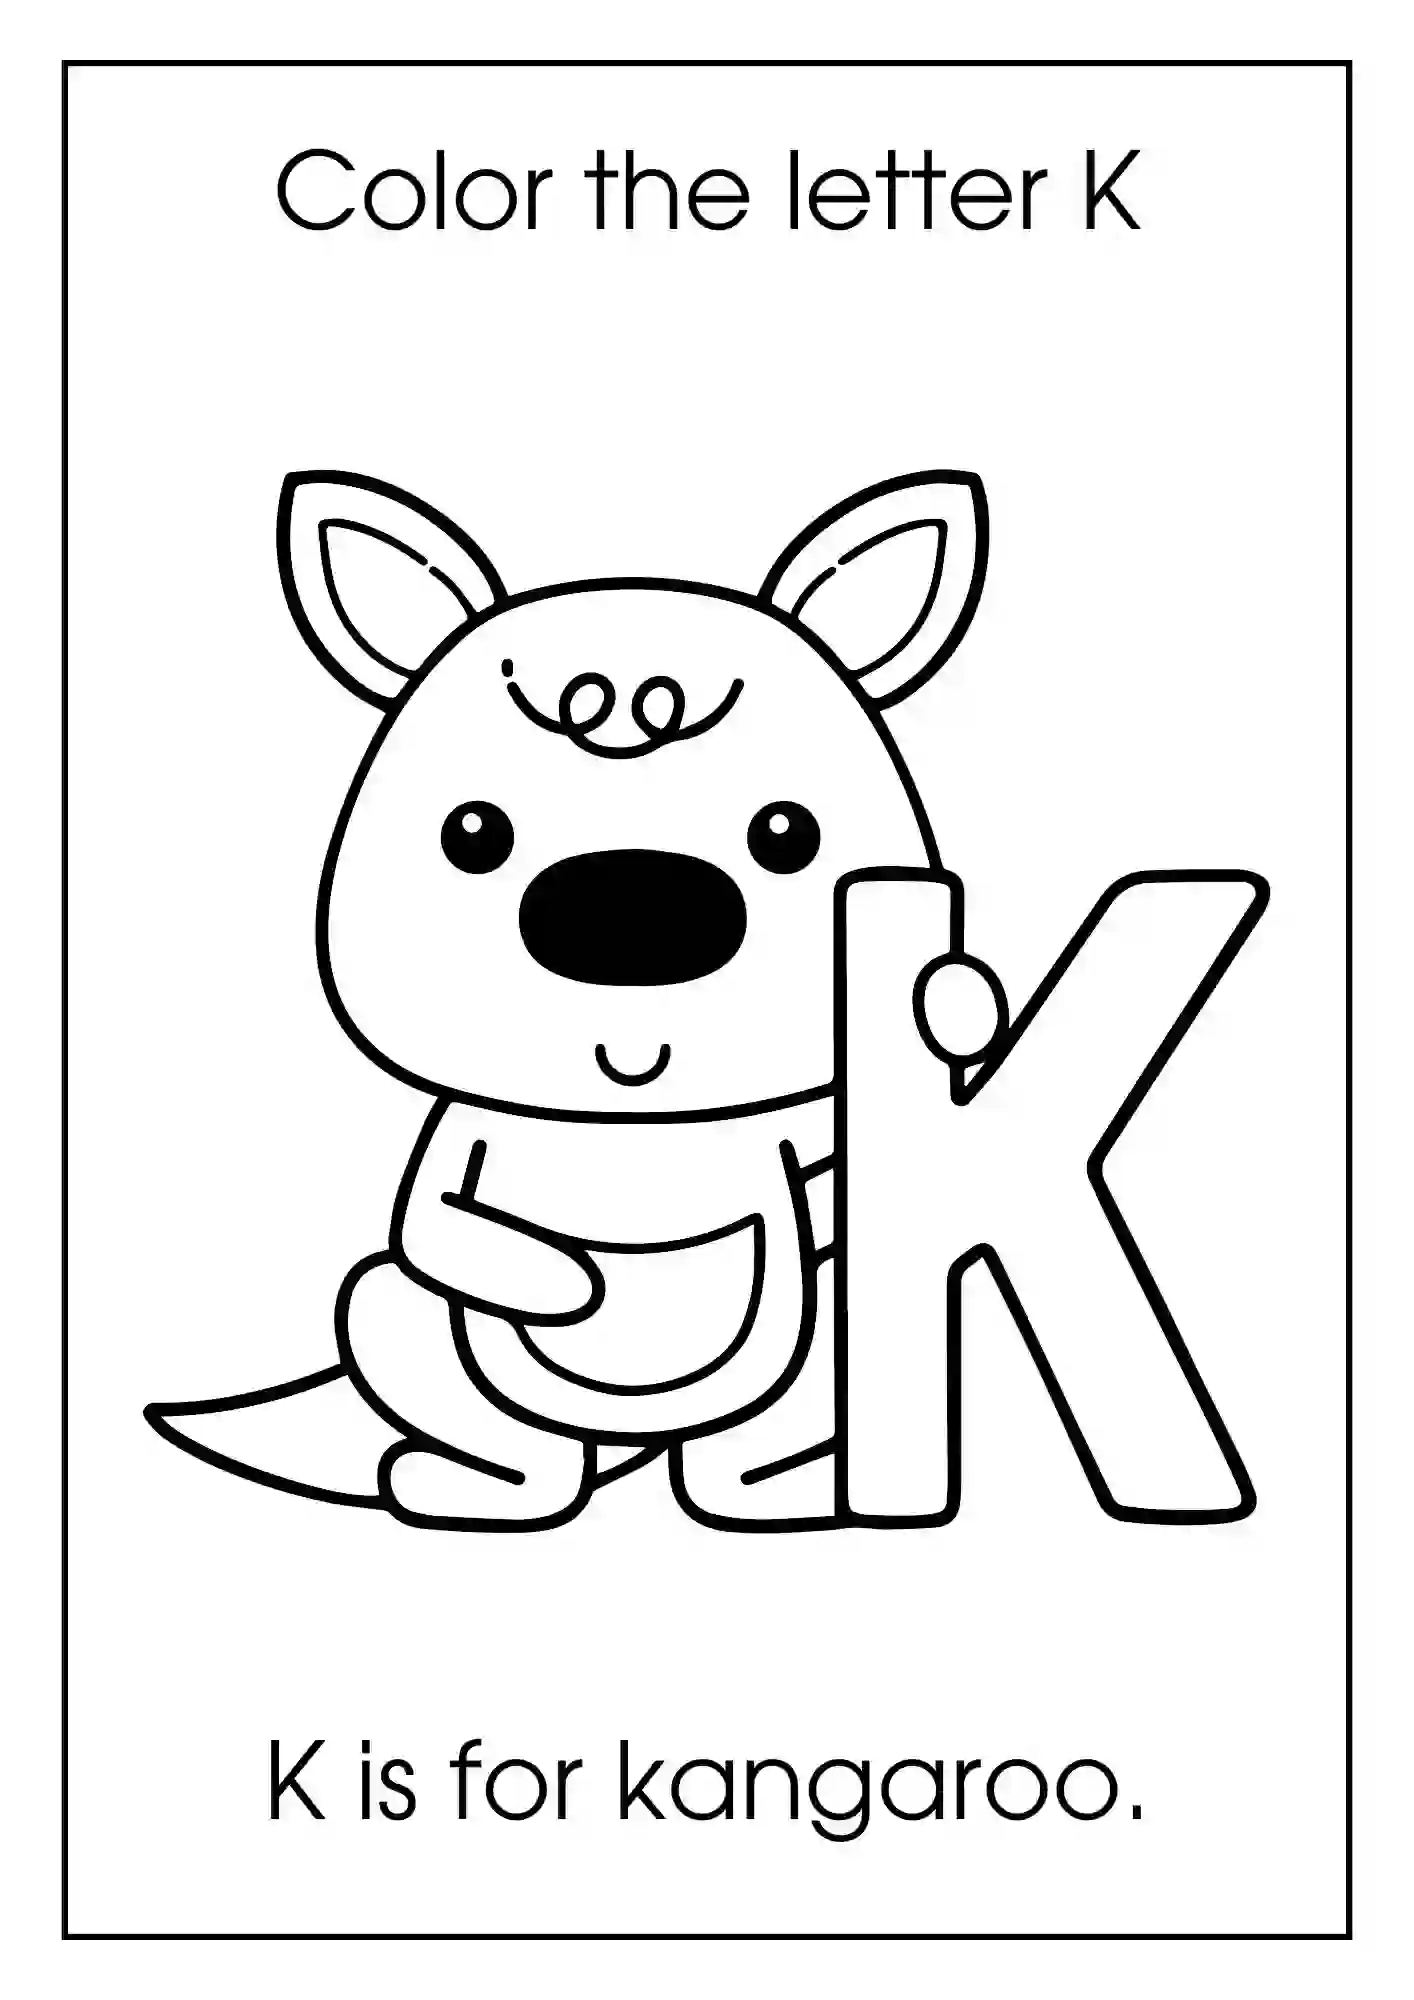 Animal Alphabet Coloring Worksheets For Kindergarten (Letter k with kangaroo)